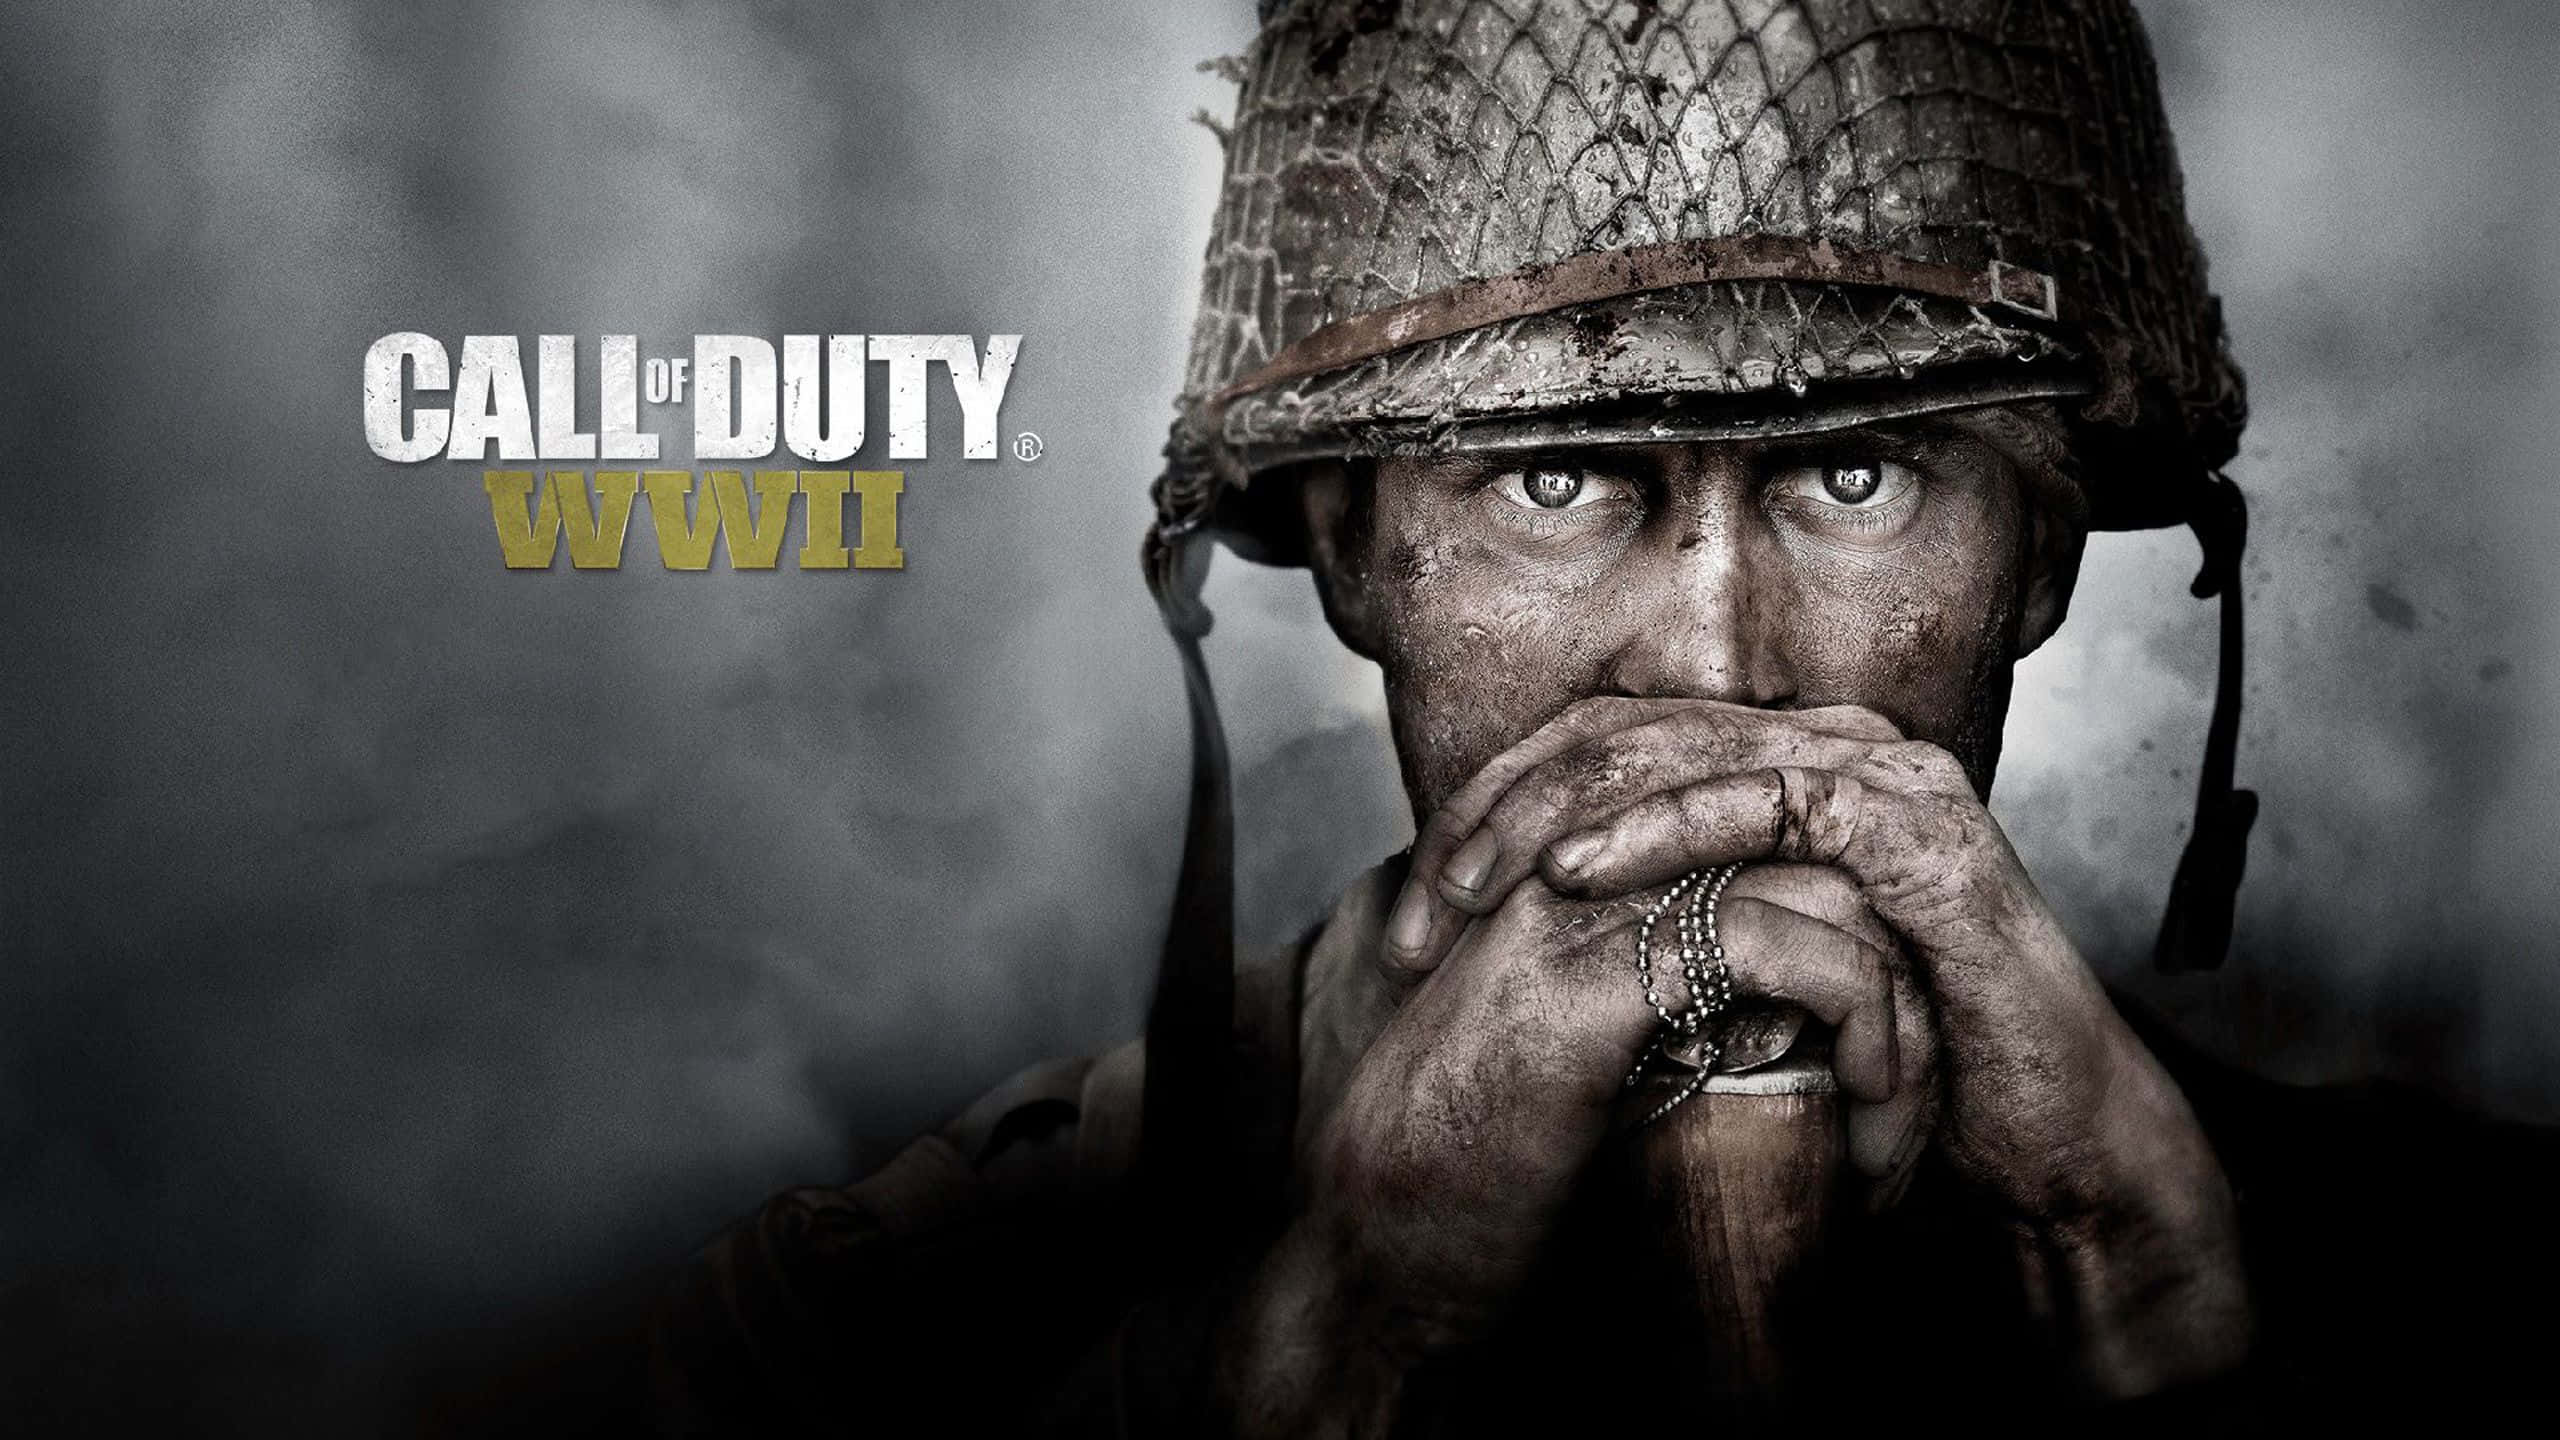 Call of Duty: WWII. Андроид Duty Wars – WWII. Call of Duty: WWII командир. Call of Duty WWII системные требования.